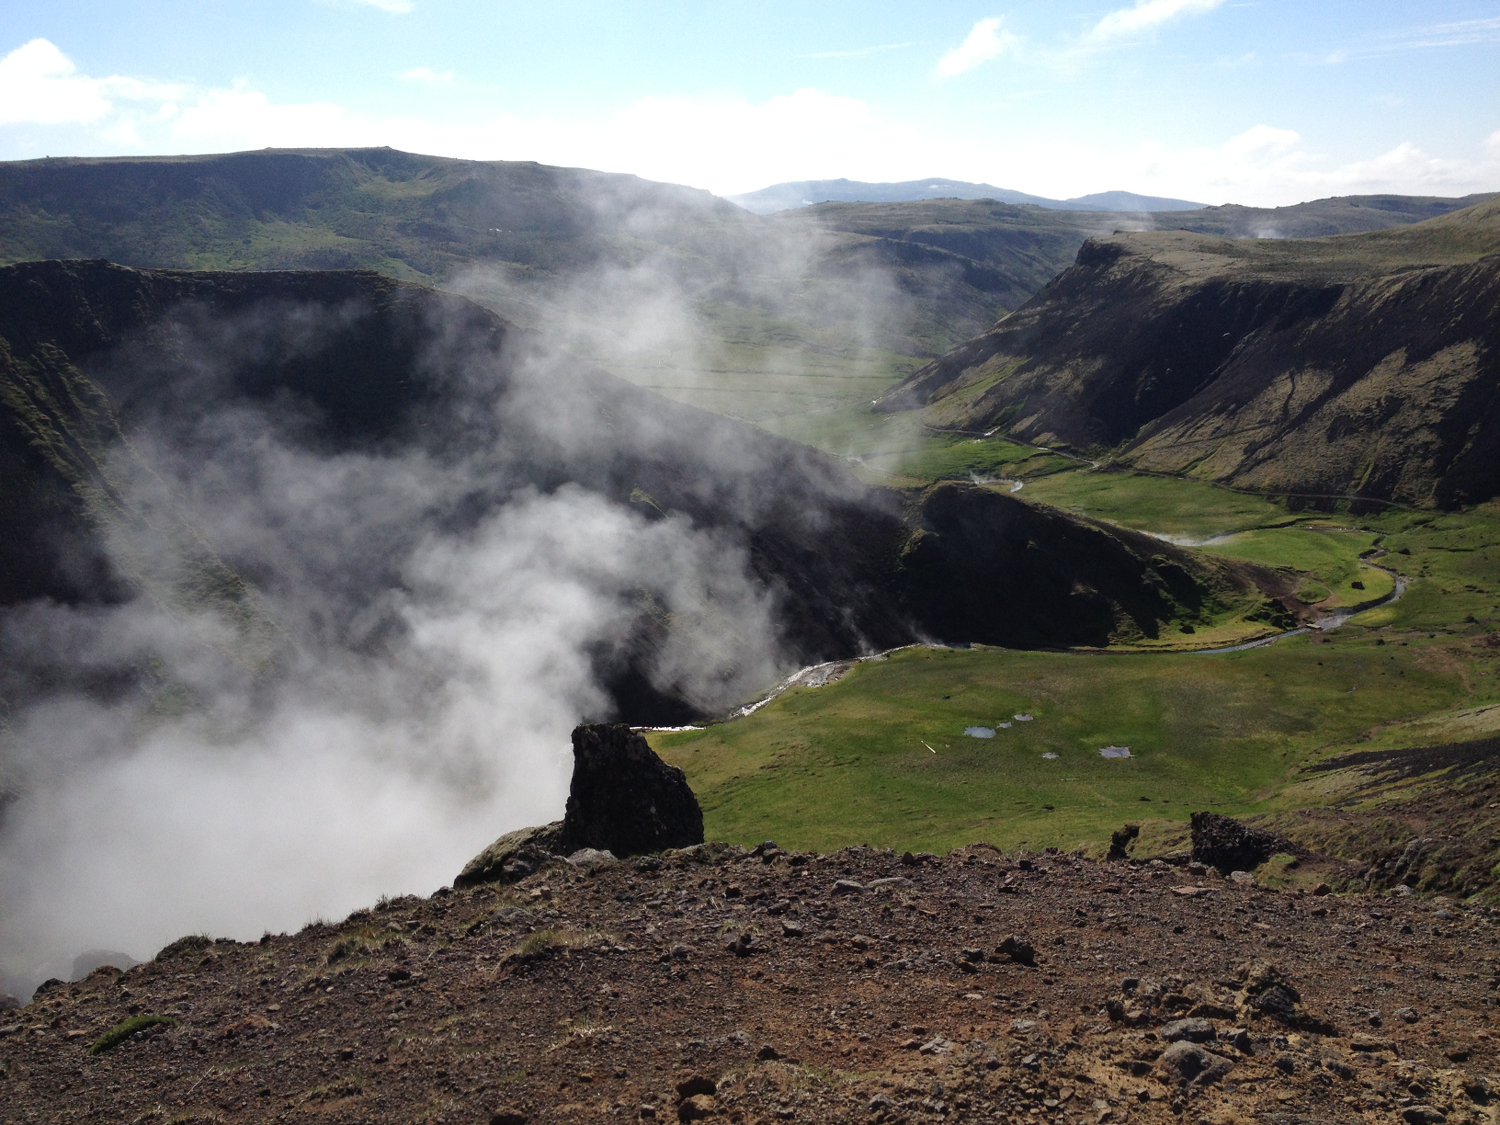 Geothermal mountain in Reykjadalur